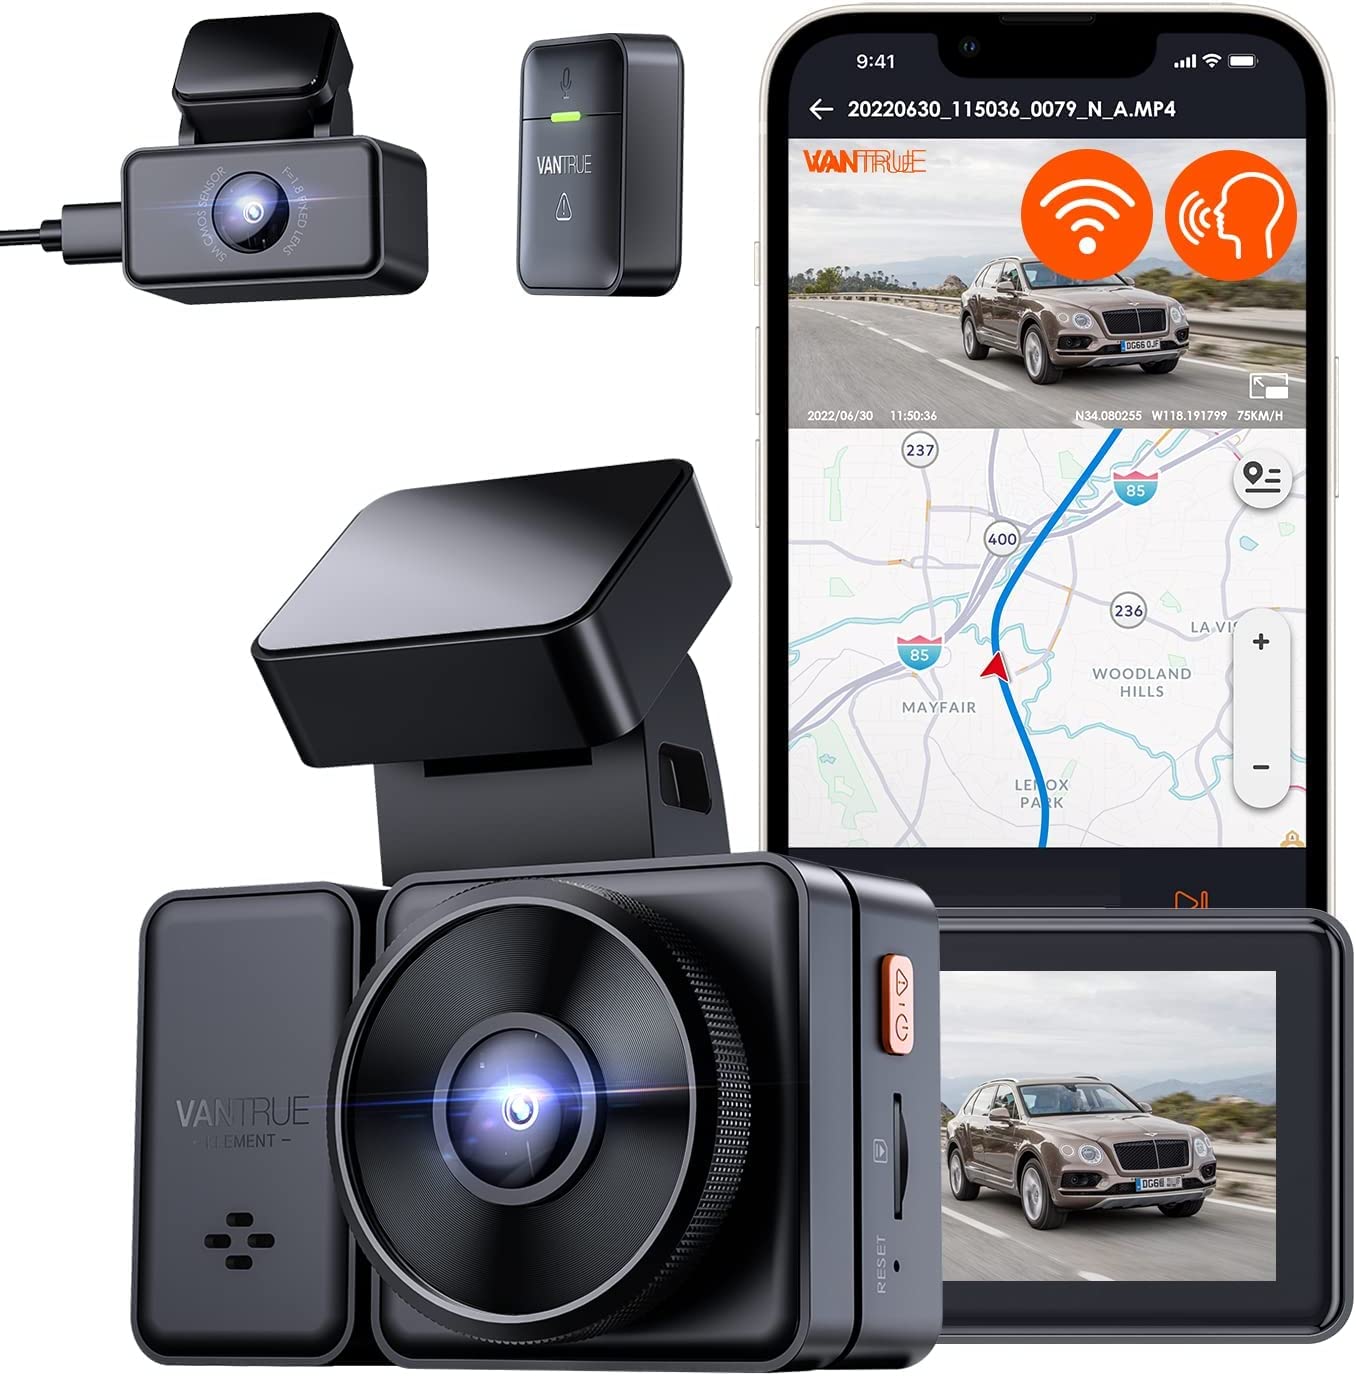 Dash Cam Front and Rear, Dash Camera for Cars WiFi/APP Control Dual Dashcam  W/ 64GB Card, 2.5K Dash Cam Front+1080P Rear Car Camera W/Super Night